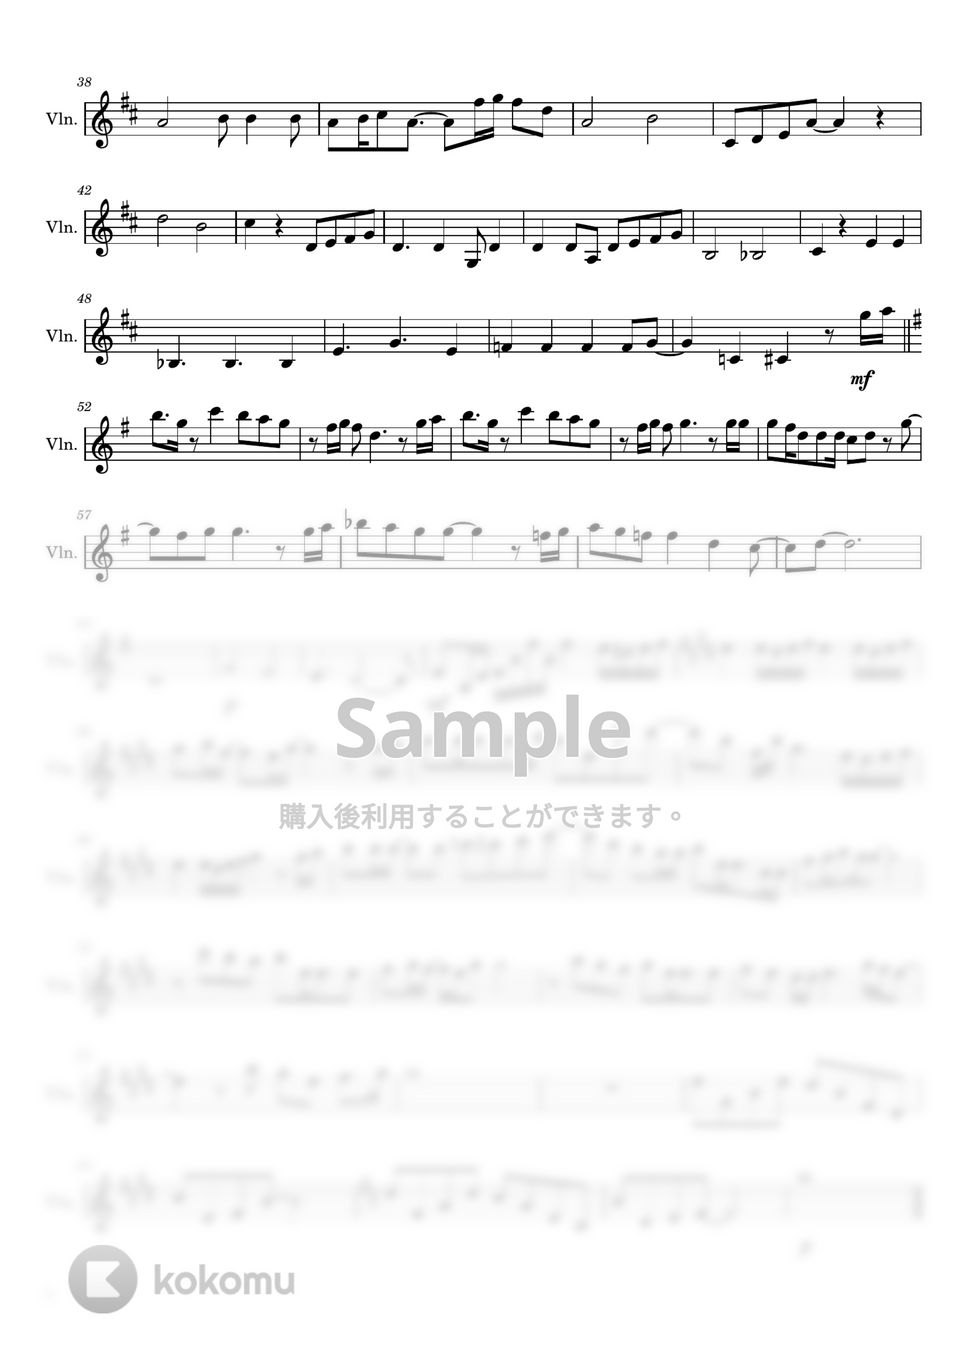 LiSA - 炎 (ヴァイオリン1 / 弦楽四重奏) by Cellotto